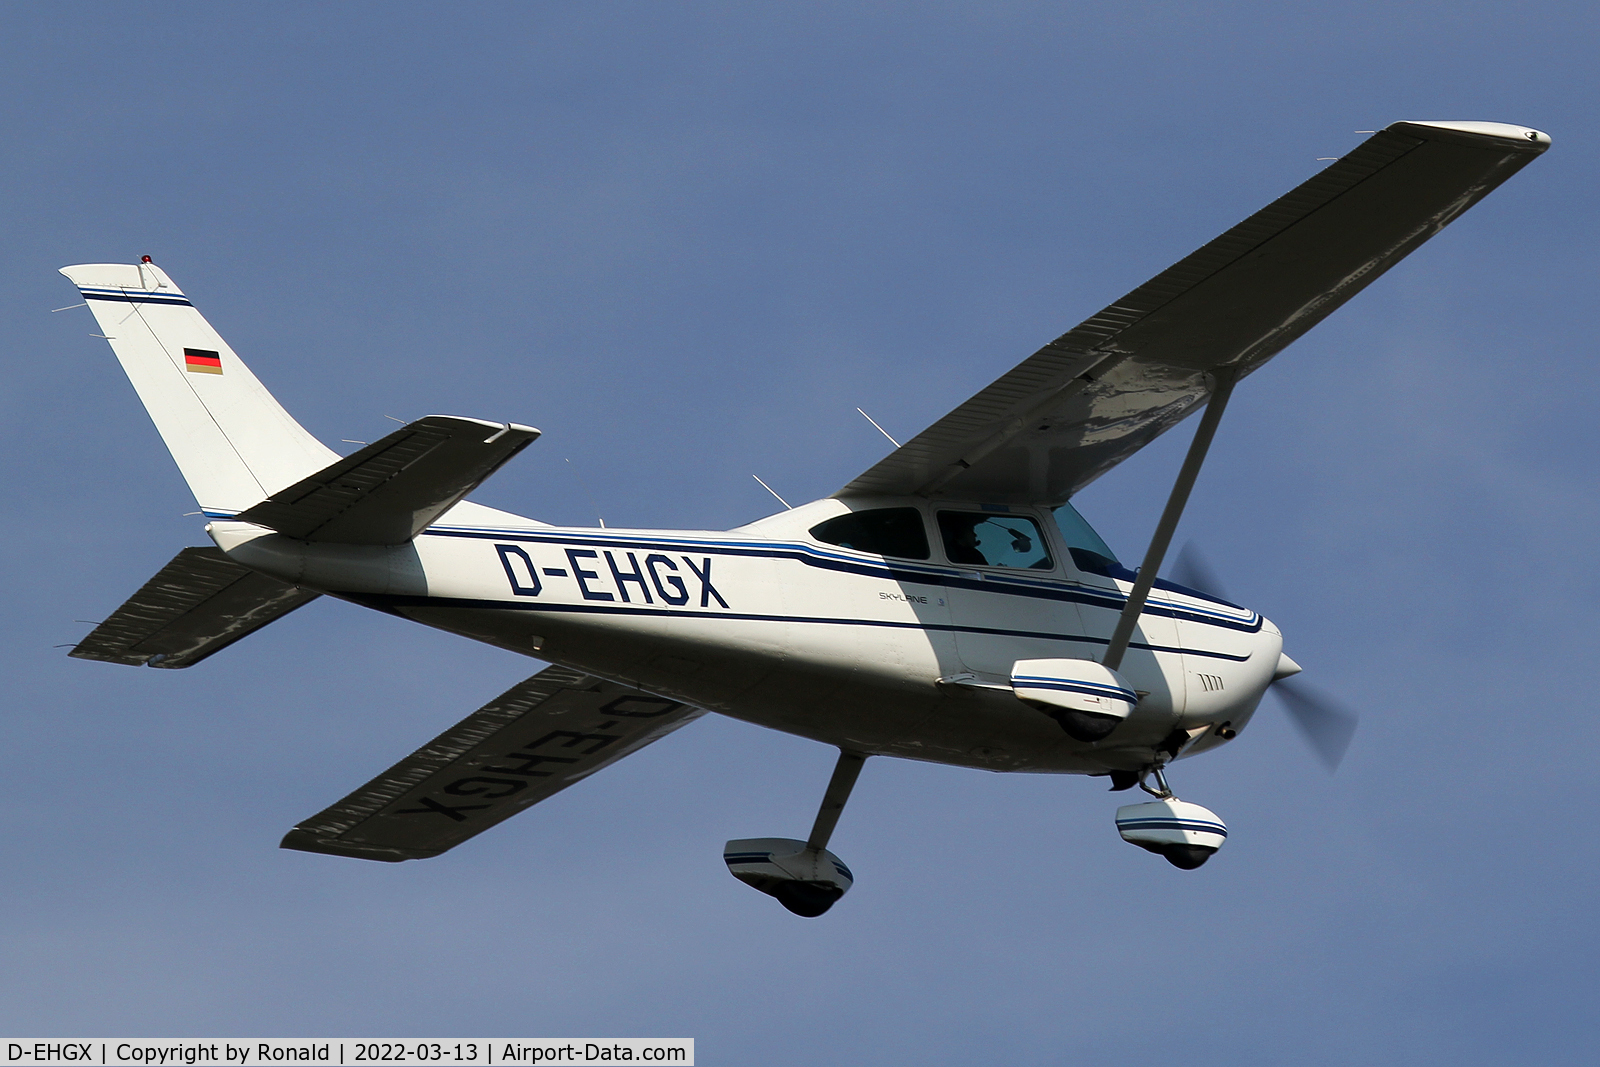 D-EHGX, 1987 Cessna 182R Skylane C/N 18268476, at edls